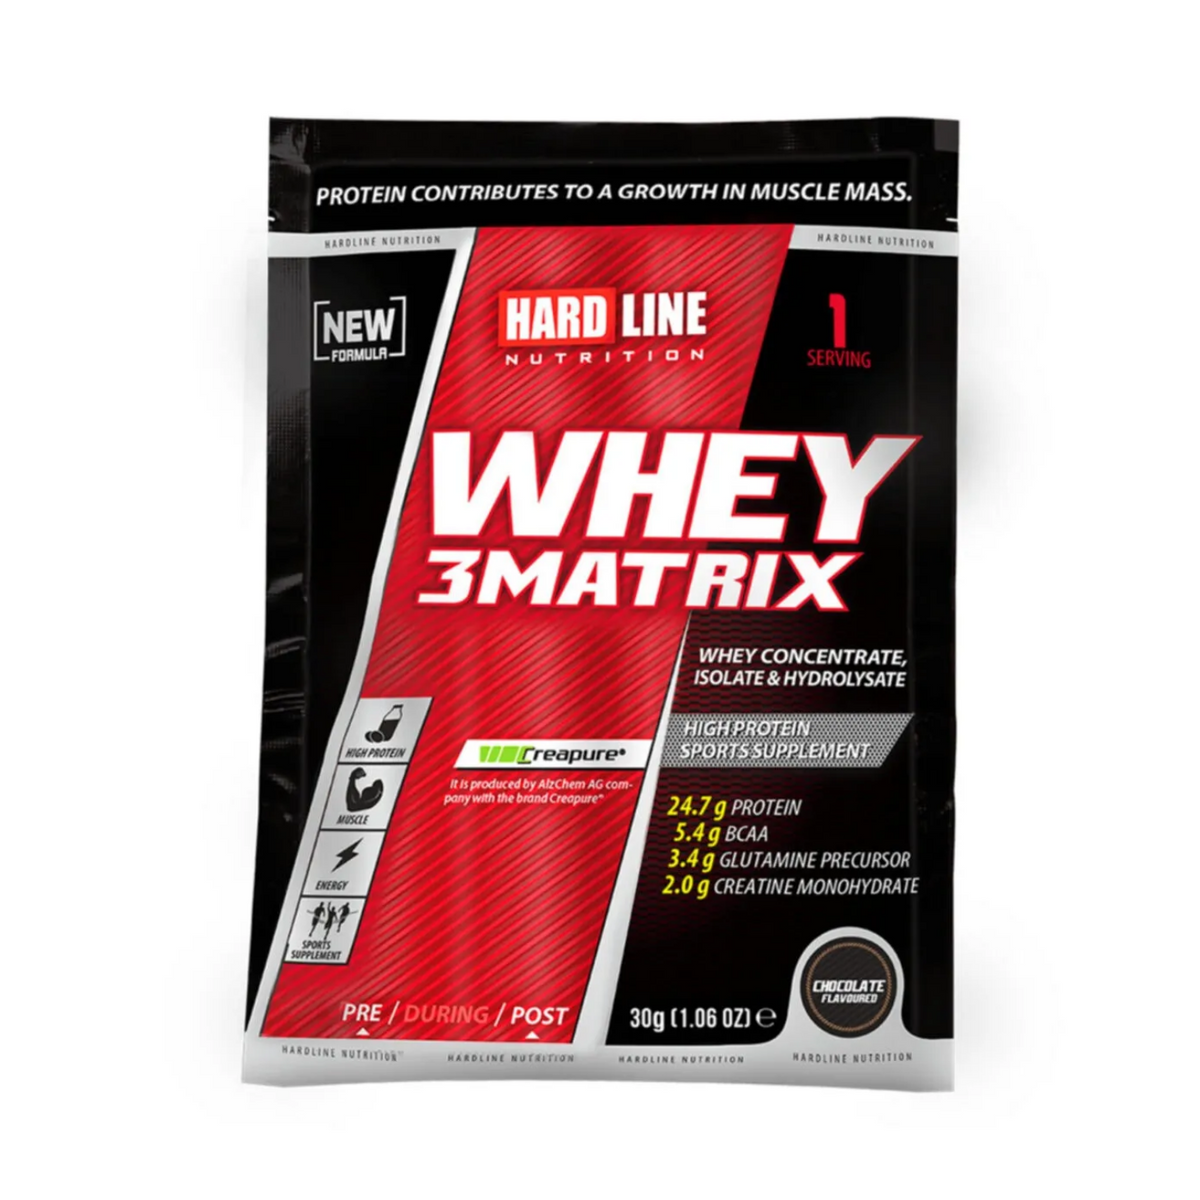 Hardline Nutrition Whey 3Matrix Çikolatalı 30 g 1 Saşe